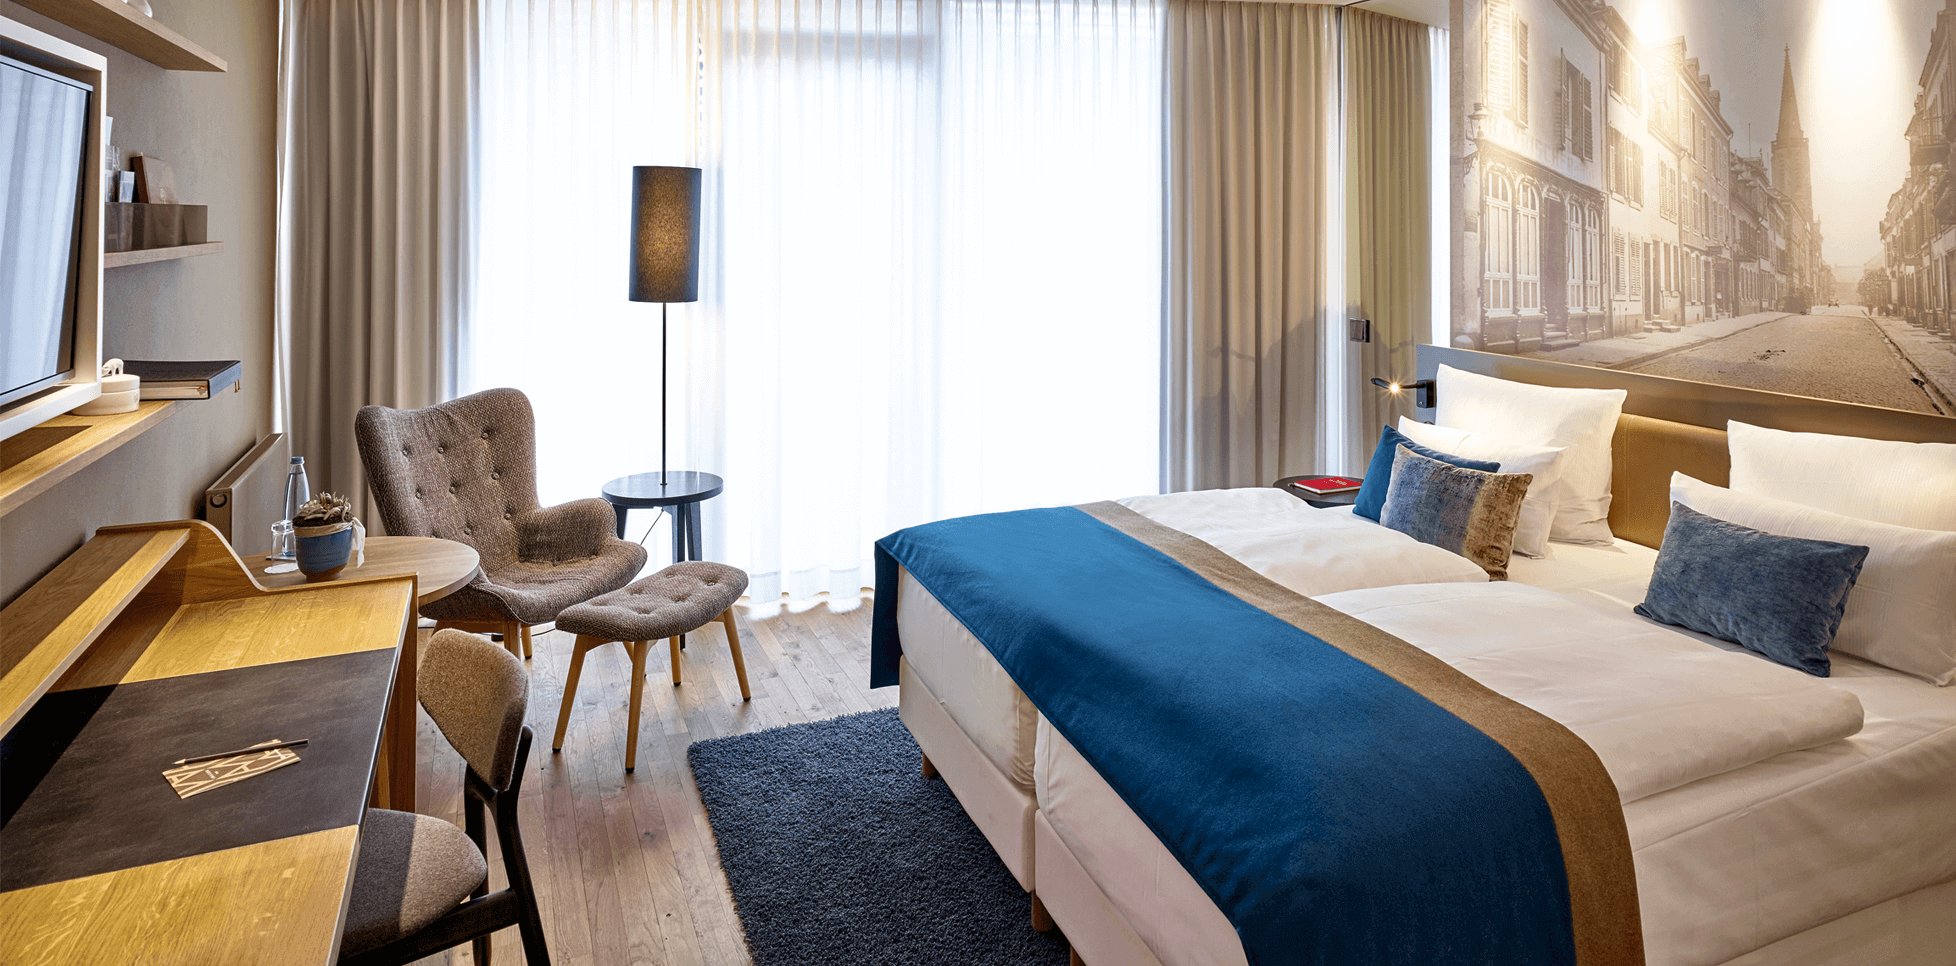 LA MAISON hotel Saarlouis - la maison hotel saarlouis stadtseite zimmer - ROOMS OVERLOOKING THE CITY